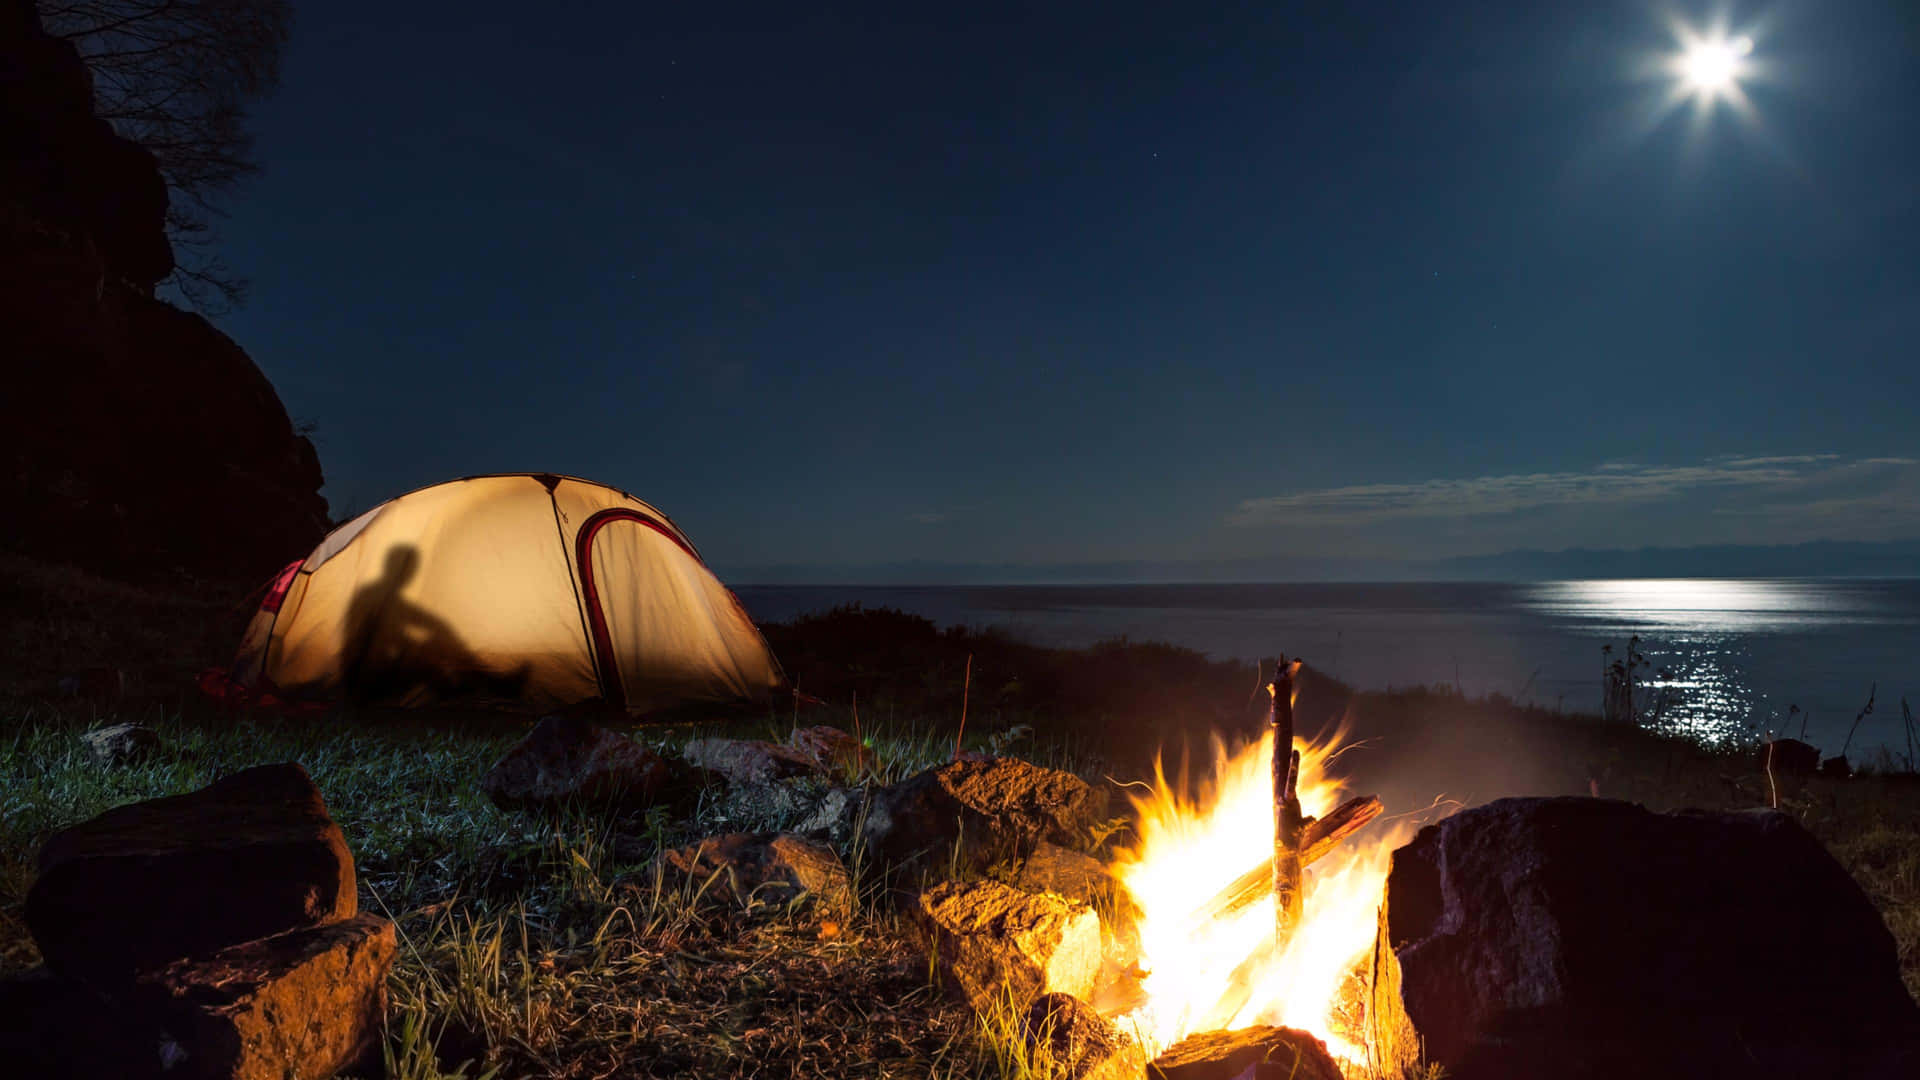 Campfire Under a Starry Night Sky